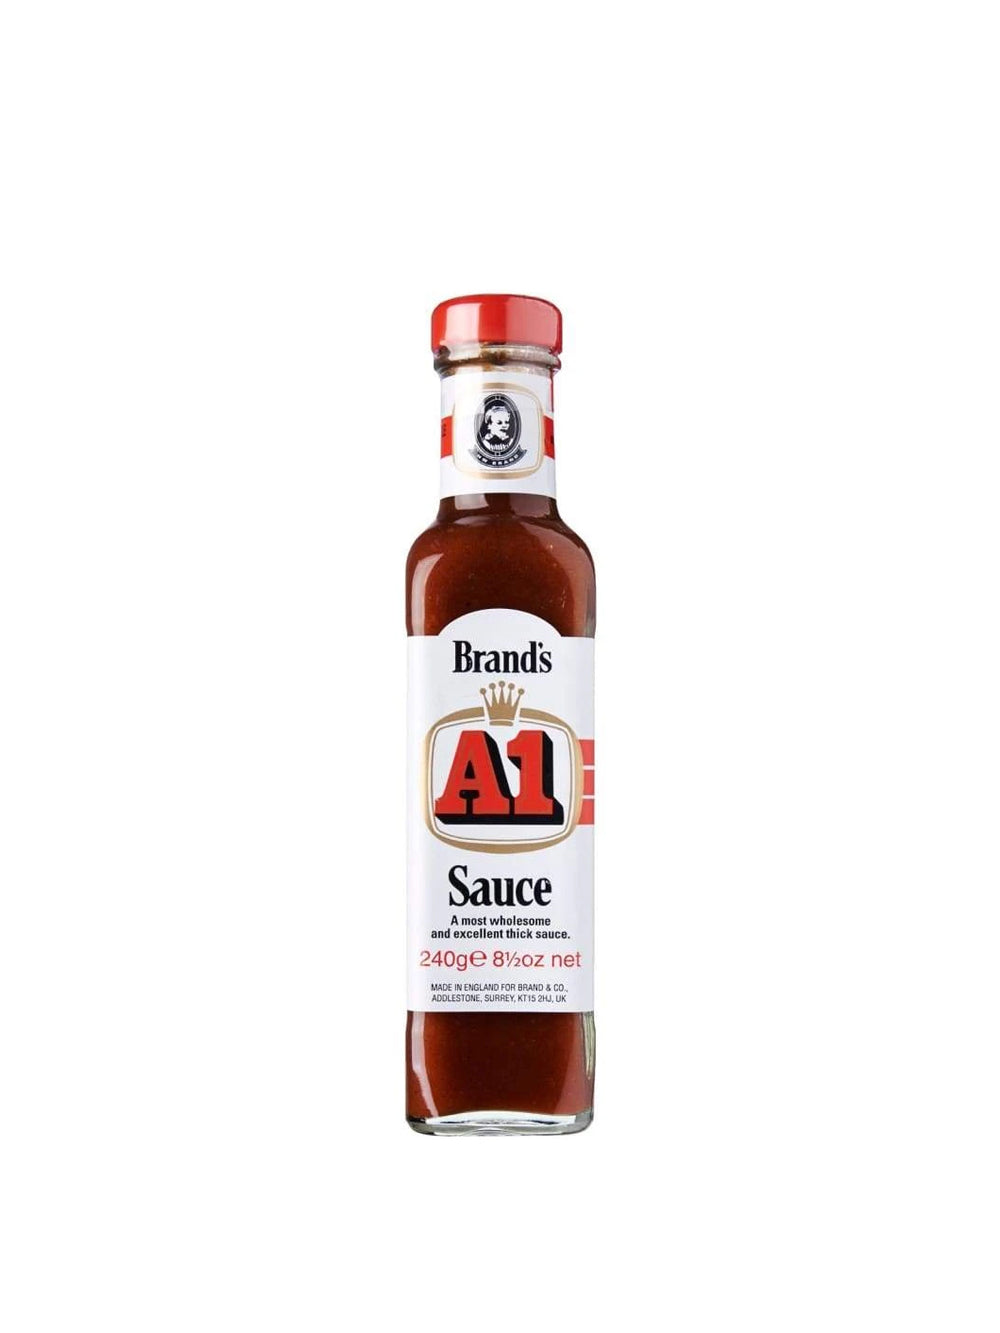 Brand's A1 Sauce